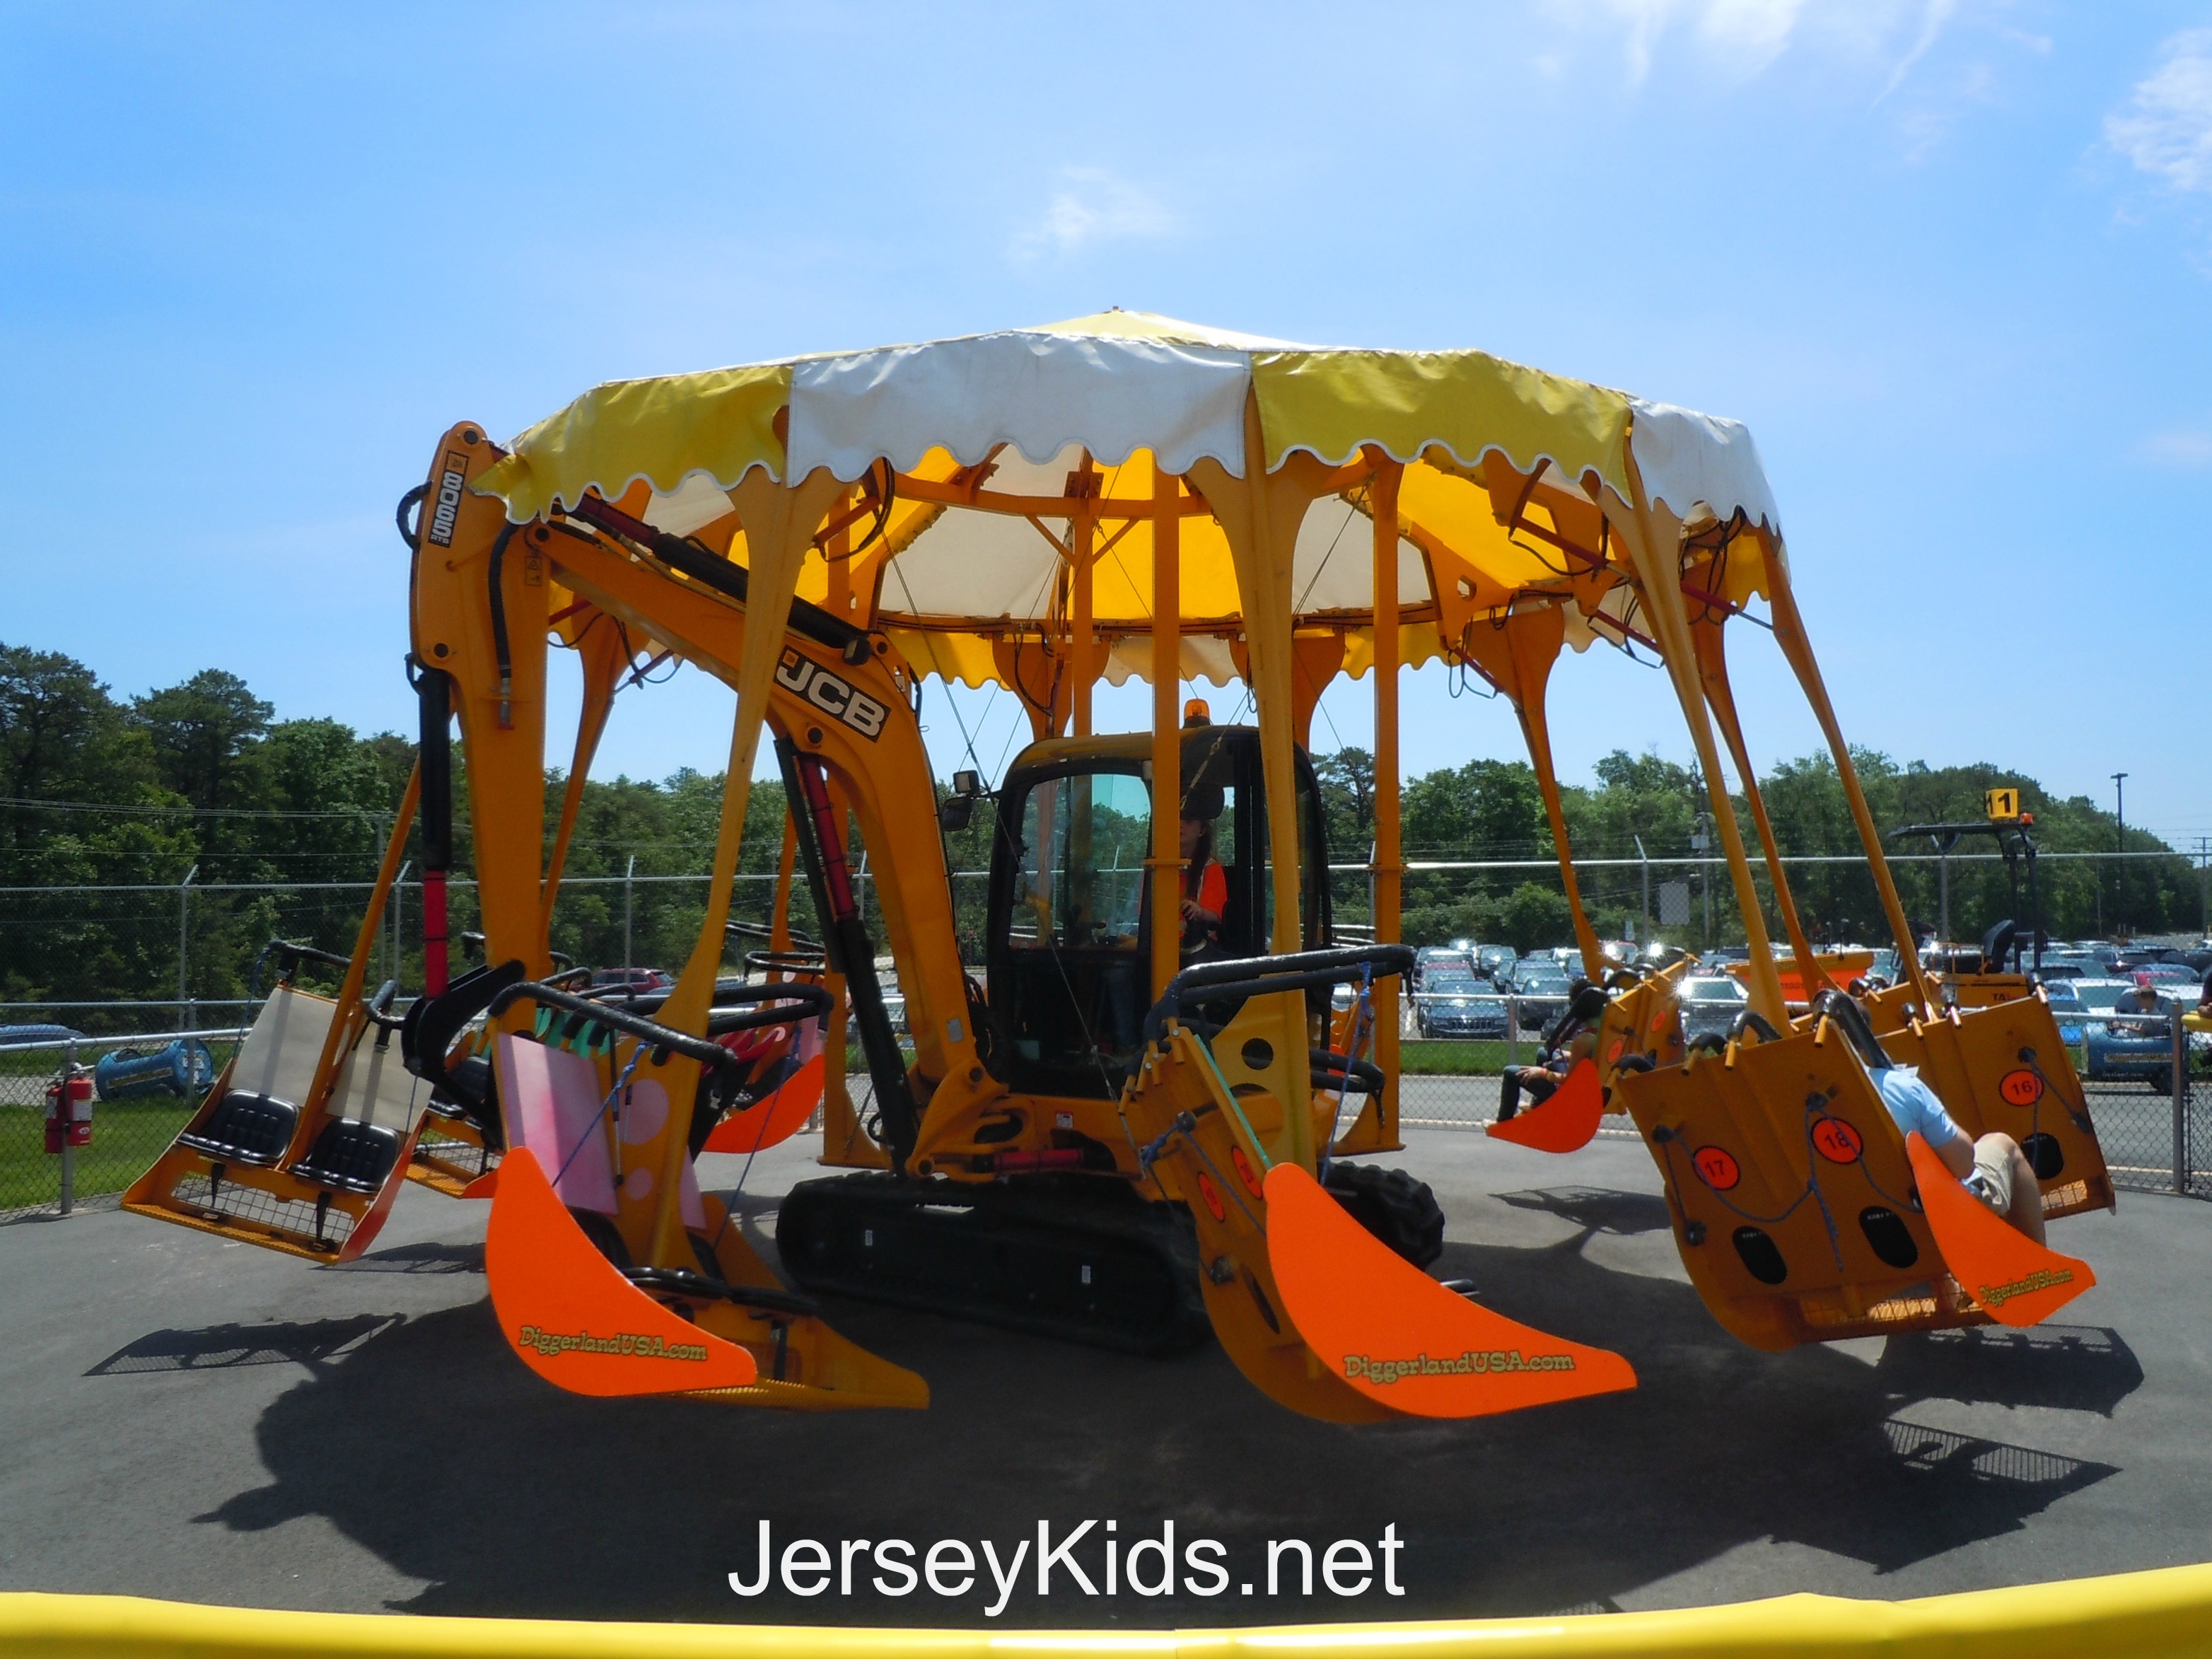 Review: Diggerland USA - Jersey Kids